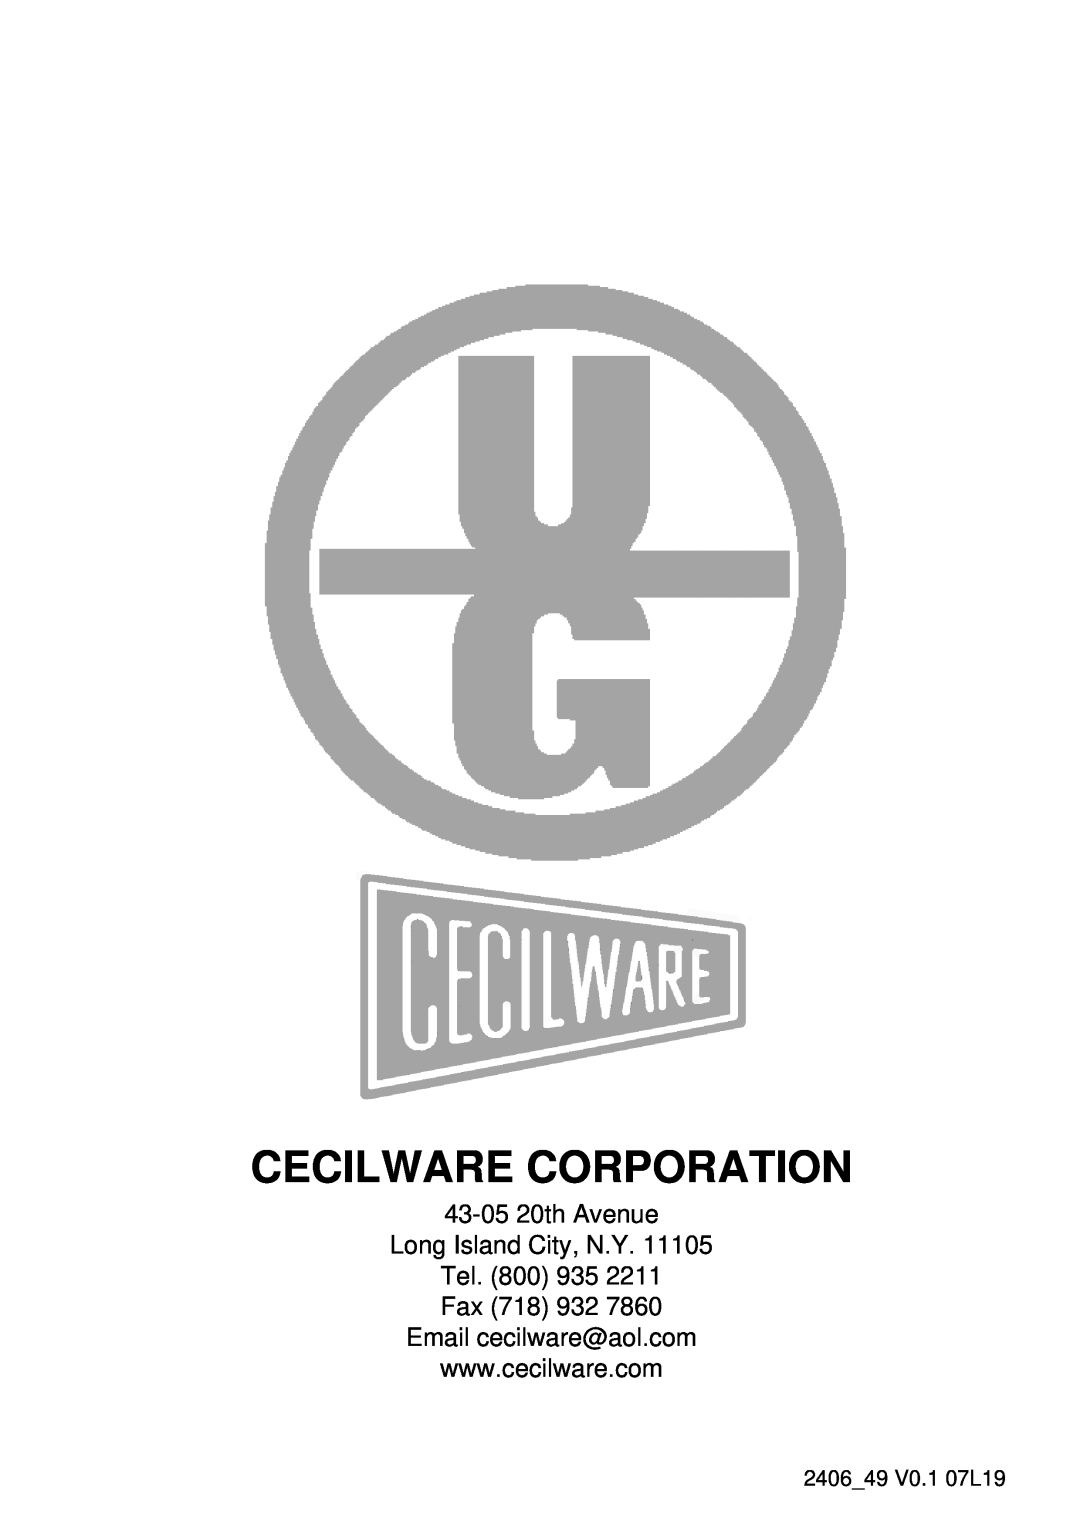 Cecilware 12-20 UL manual Cecilware Corporation, 43-0520th Avenue Long Island City, N.Y, 2406 49 V0.1 07L19 